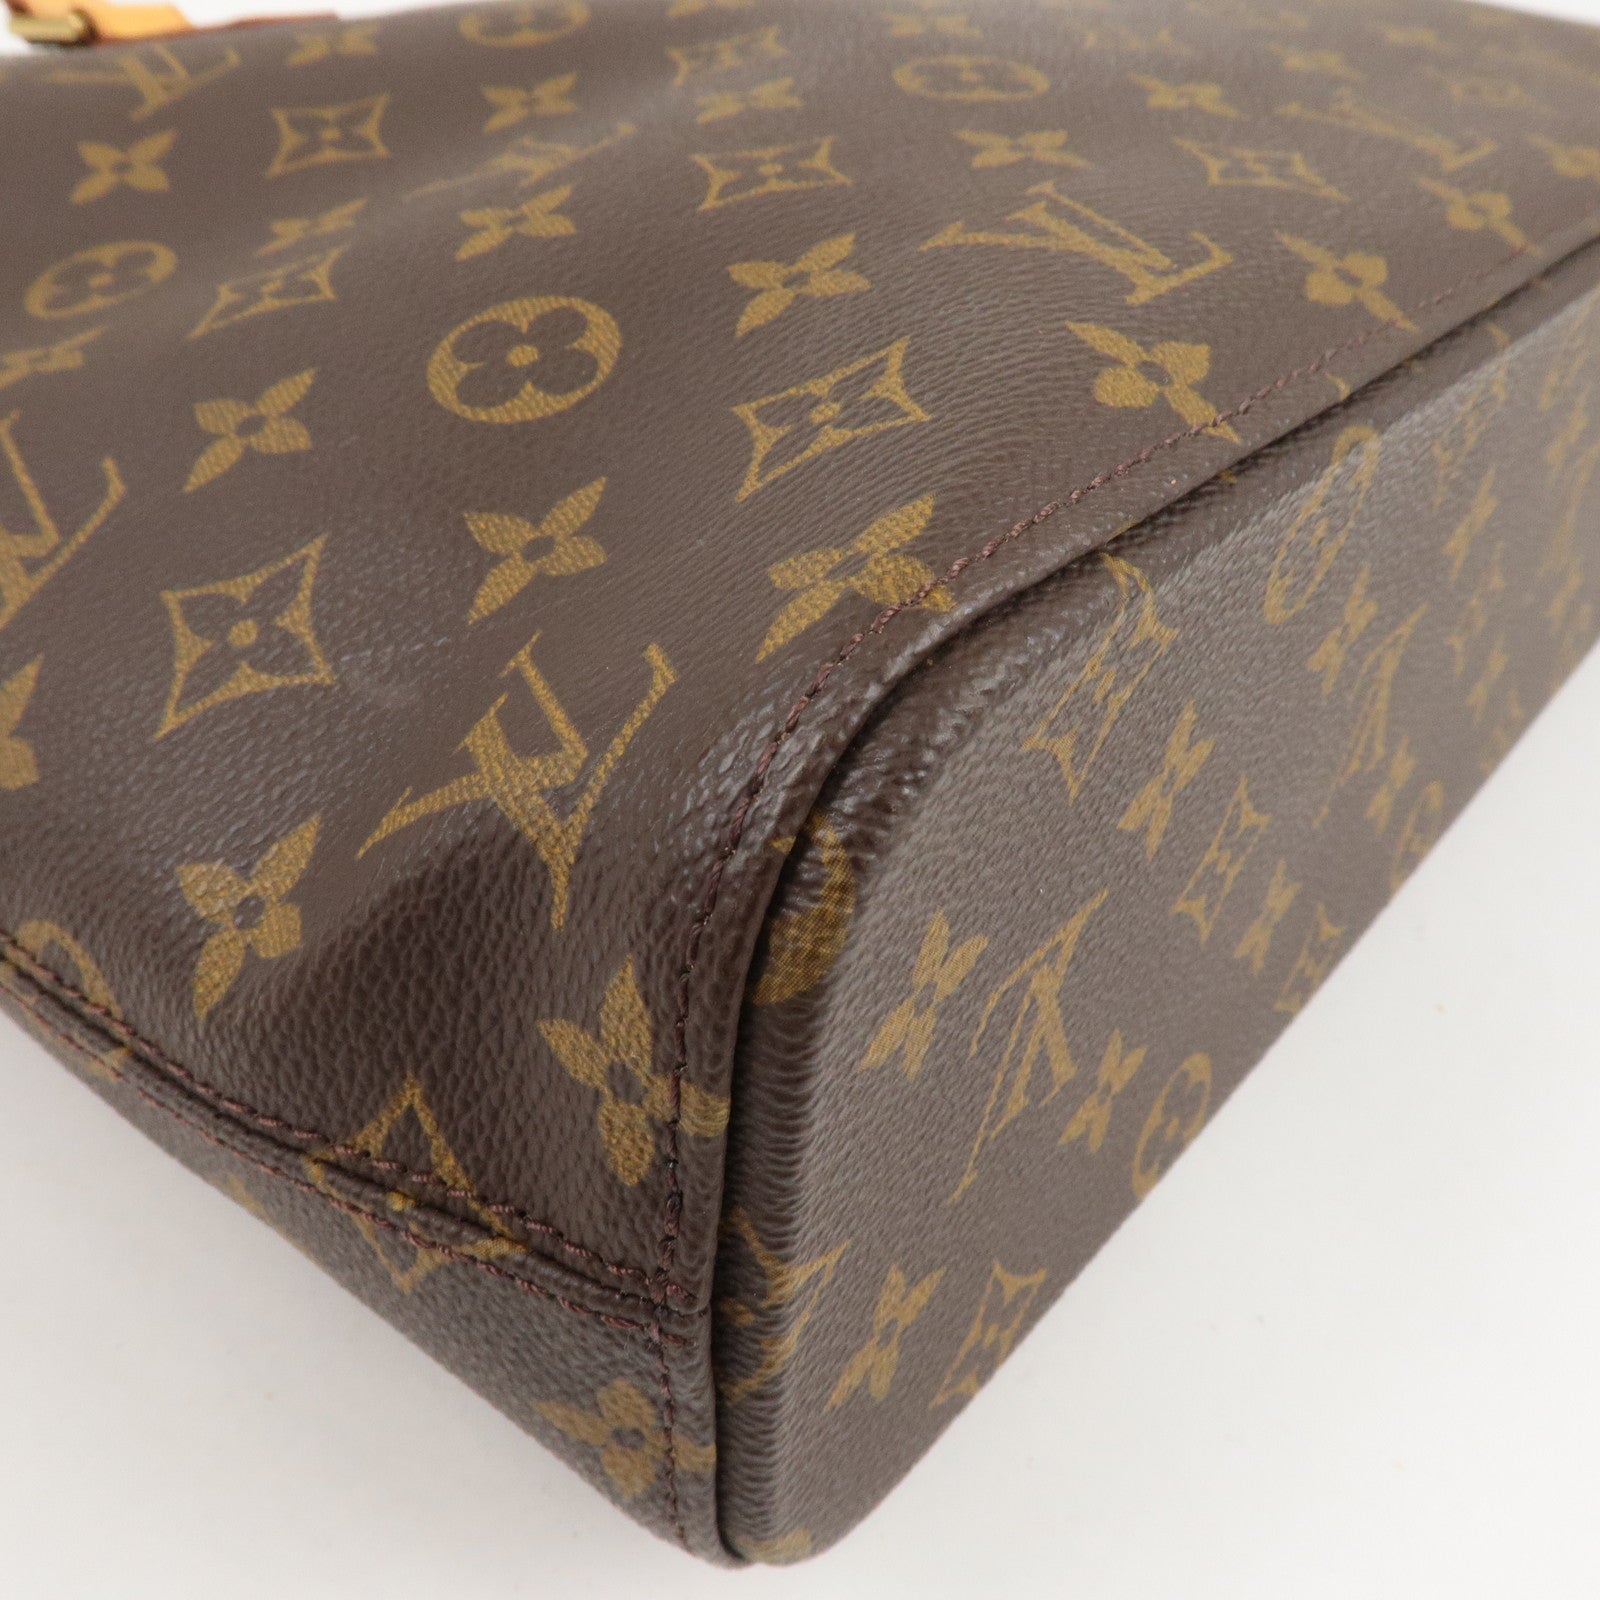 Authentic Louis Vuitton Luco Monogram Shoulder Tote Bag Brown